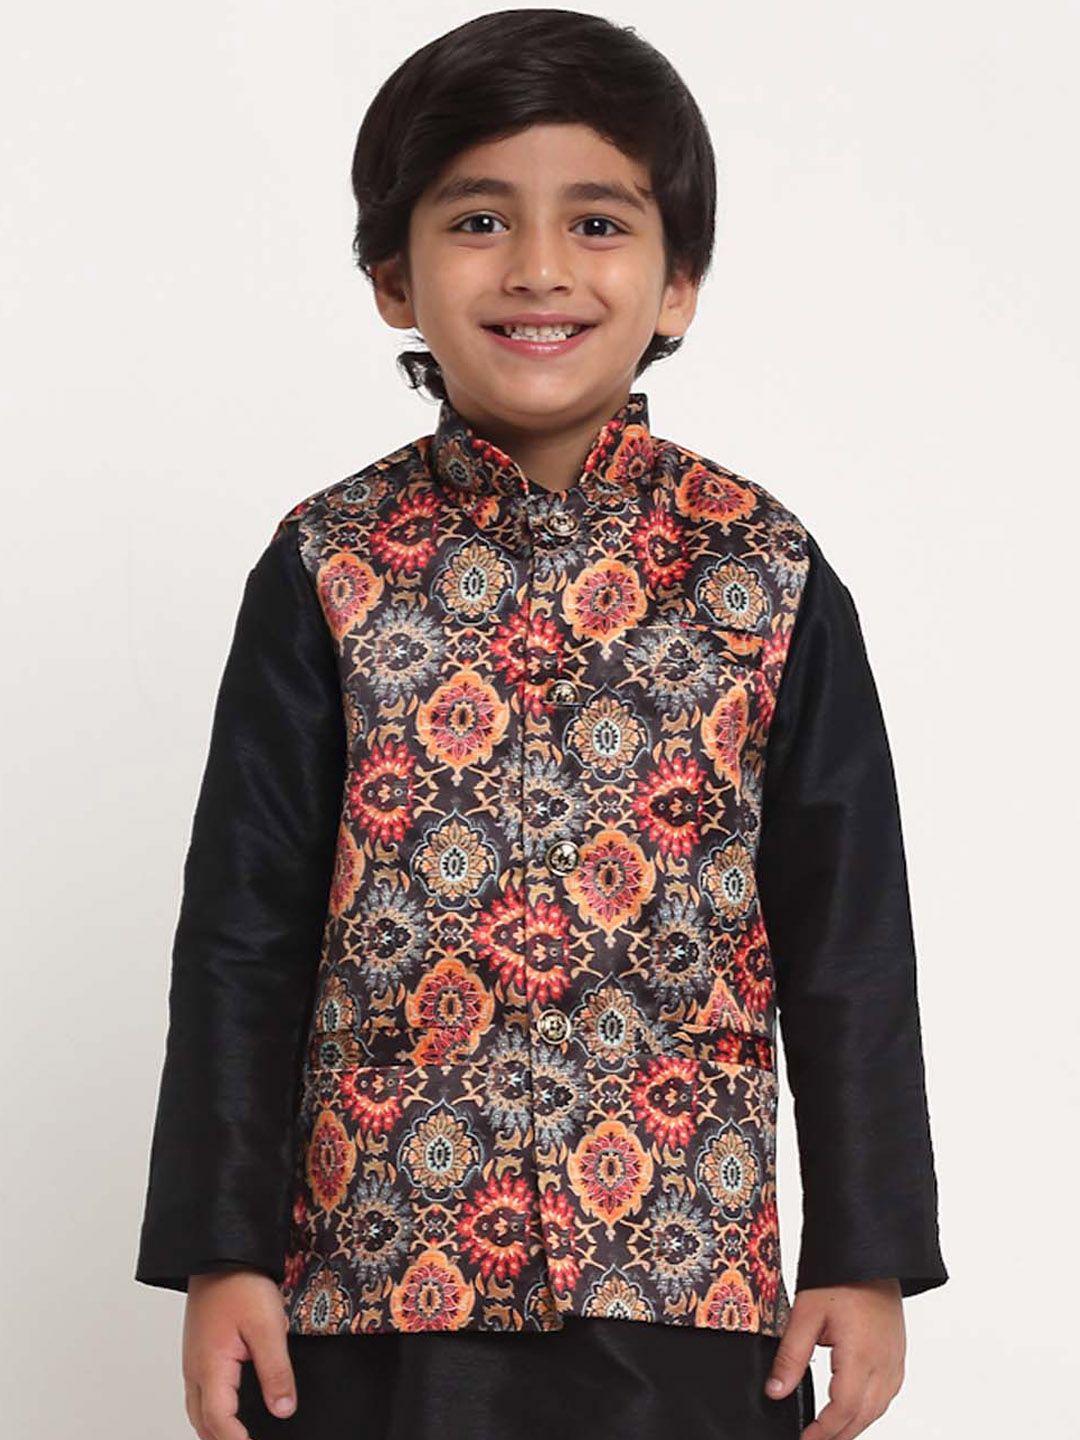 benstoke-boys-black-&-orange-colored-woven-design-nehru-jacket